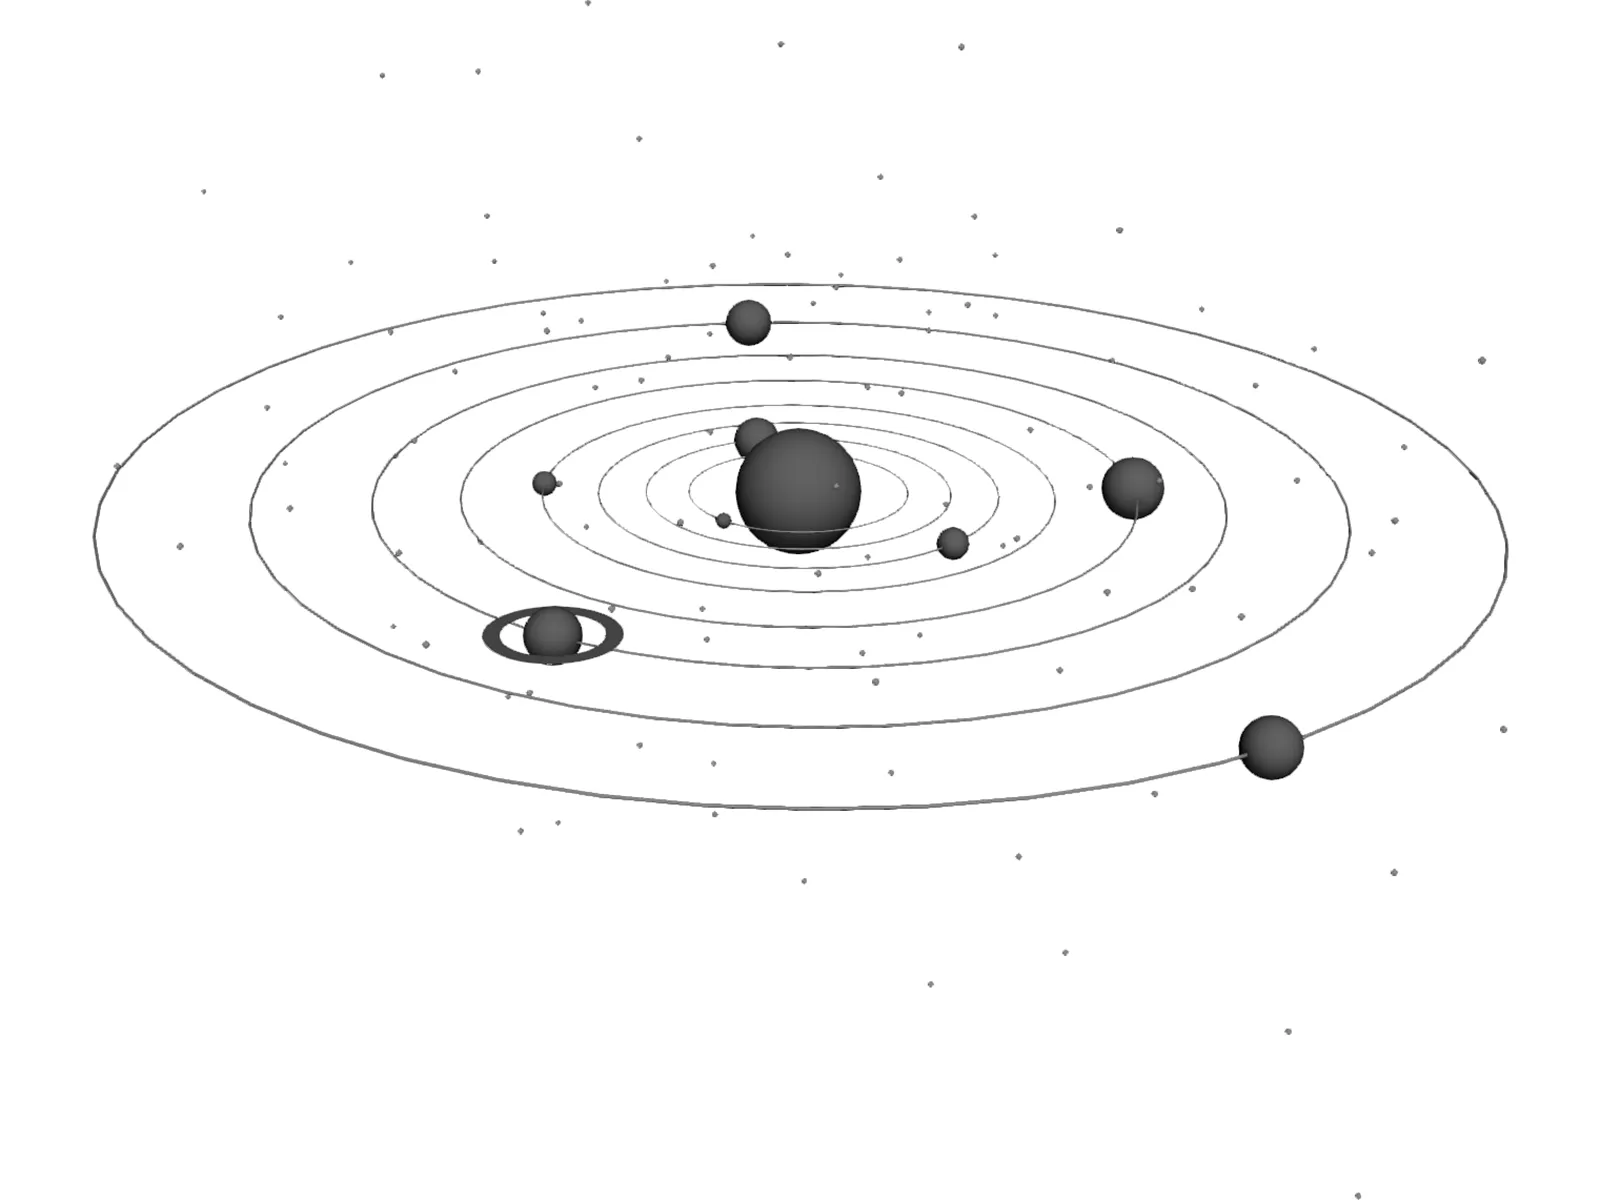 Solar System 3D Model